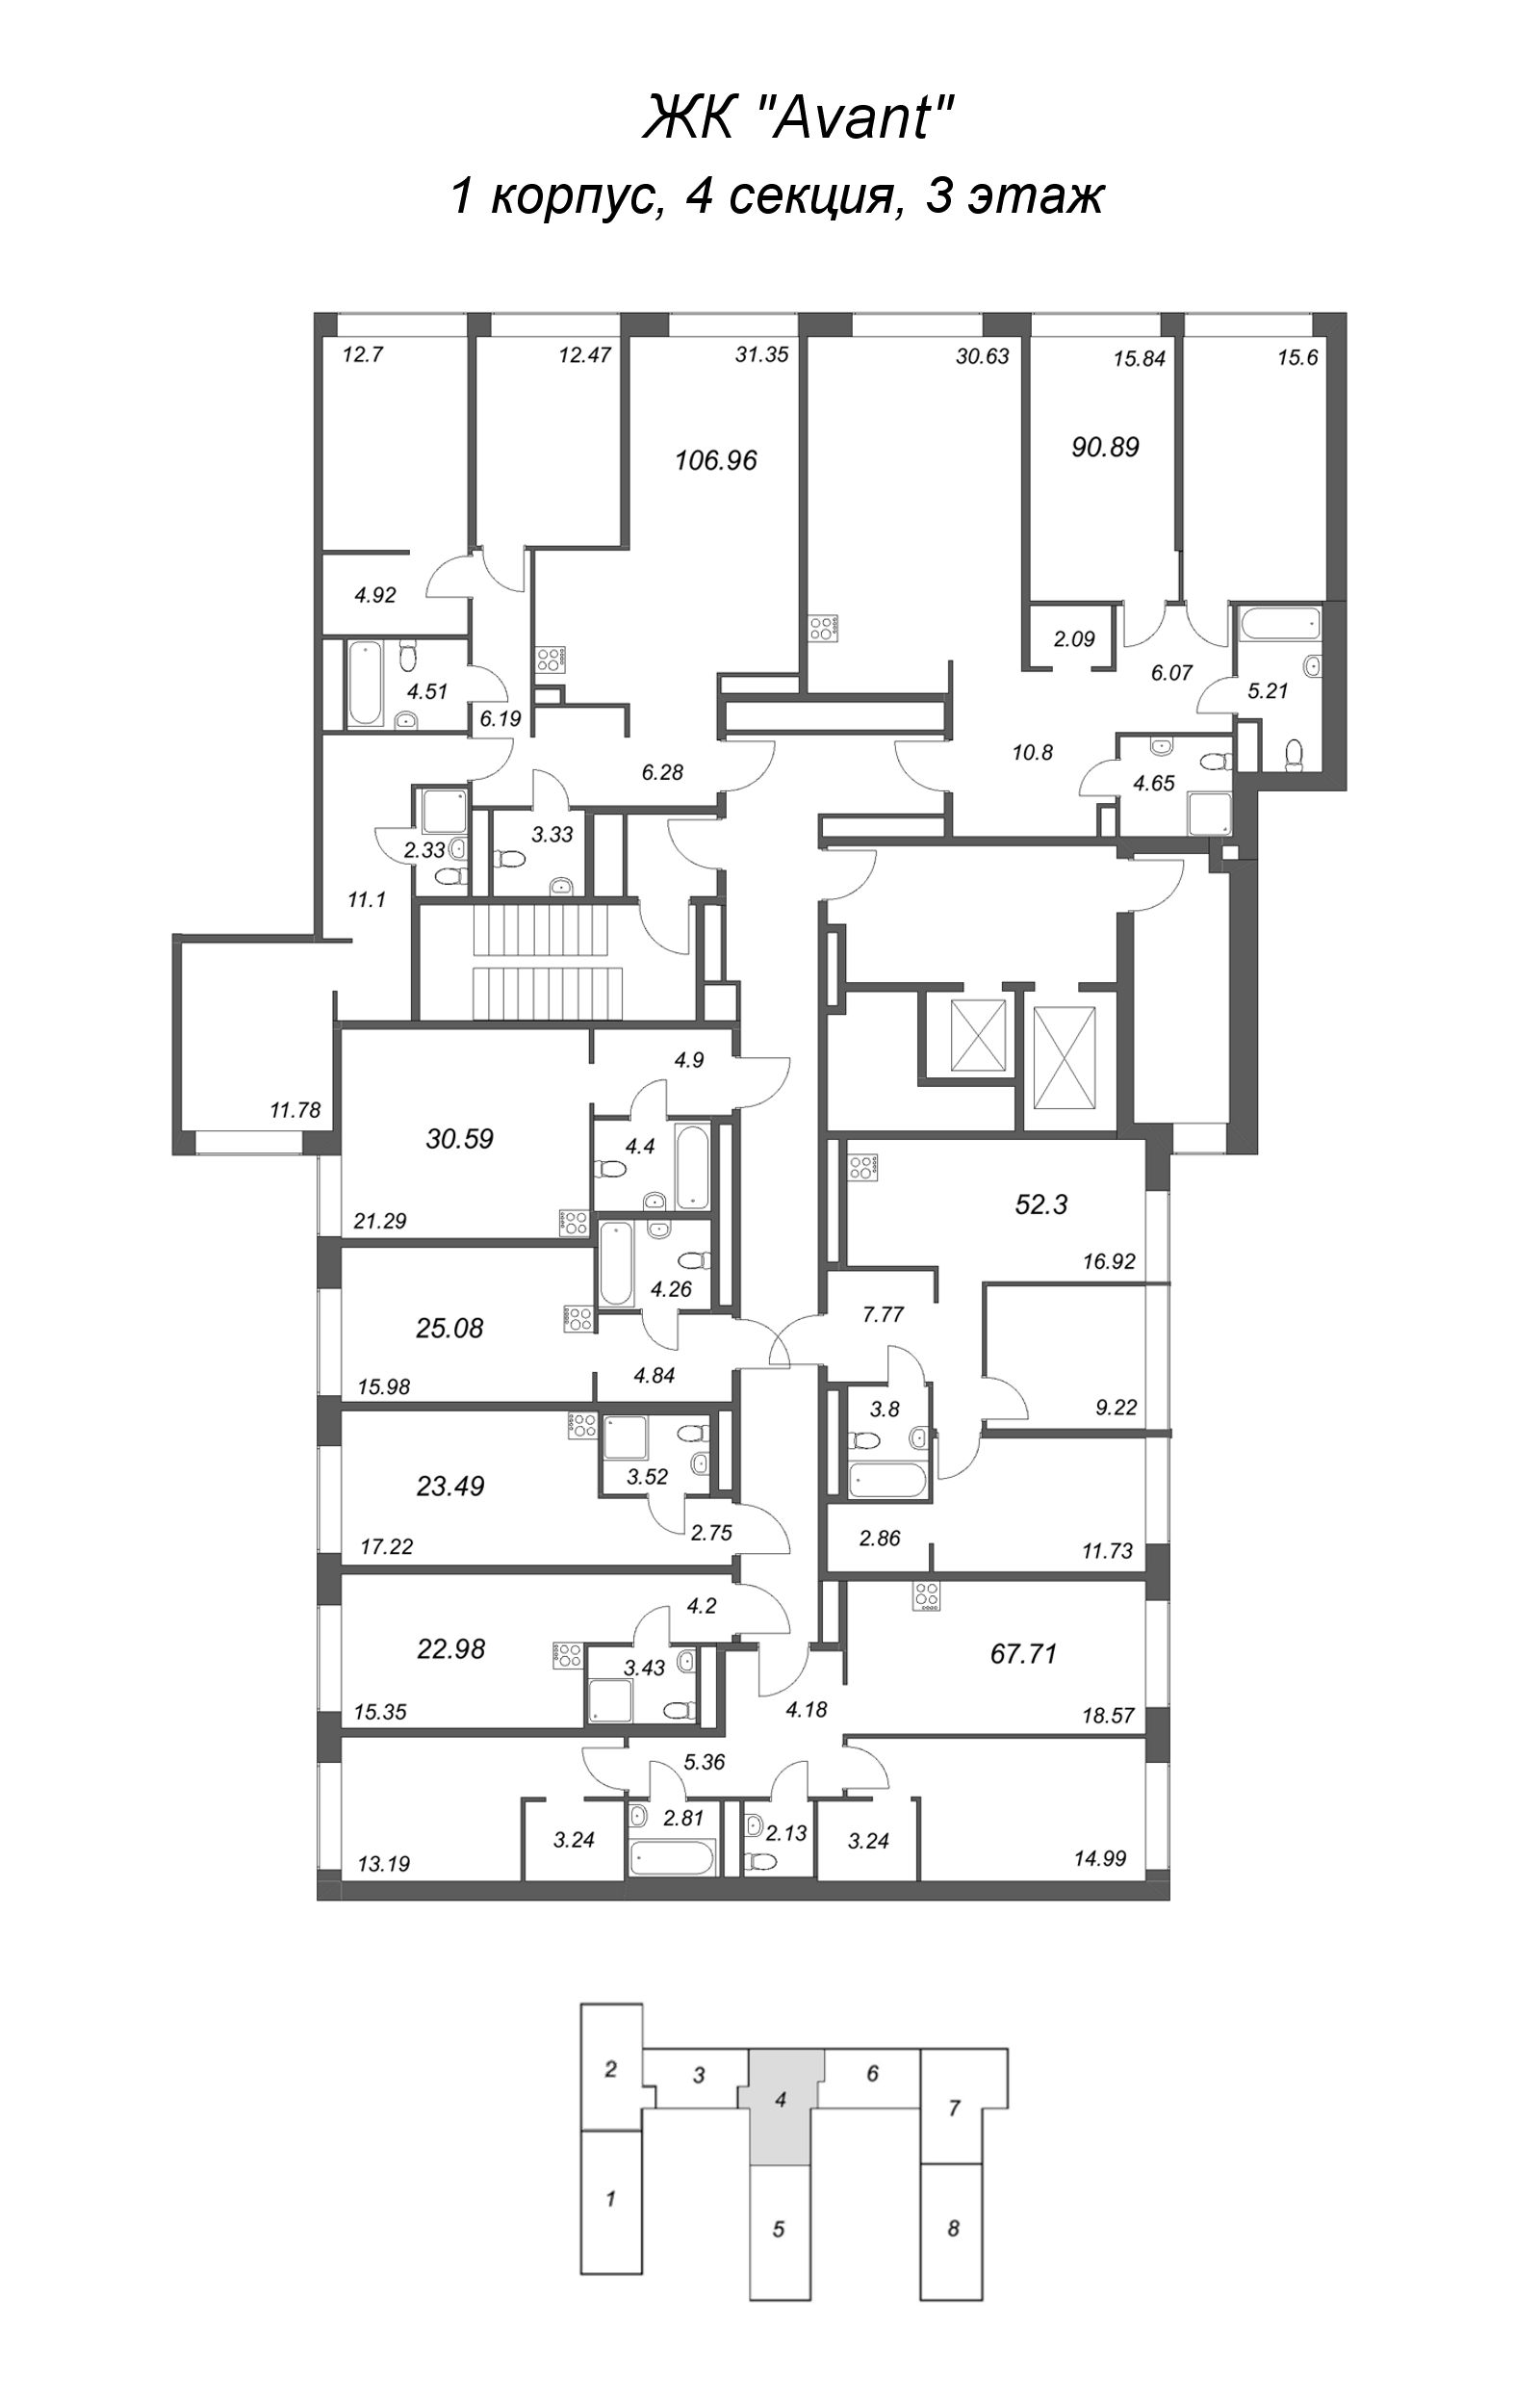 4-комнатная (Евро) квартира, 106.96 м² - планировка этажа